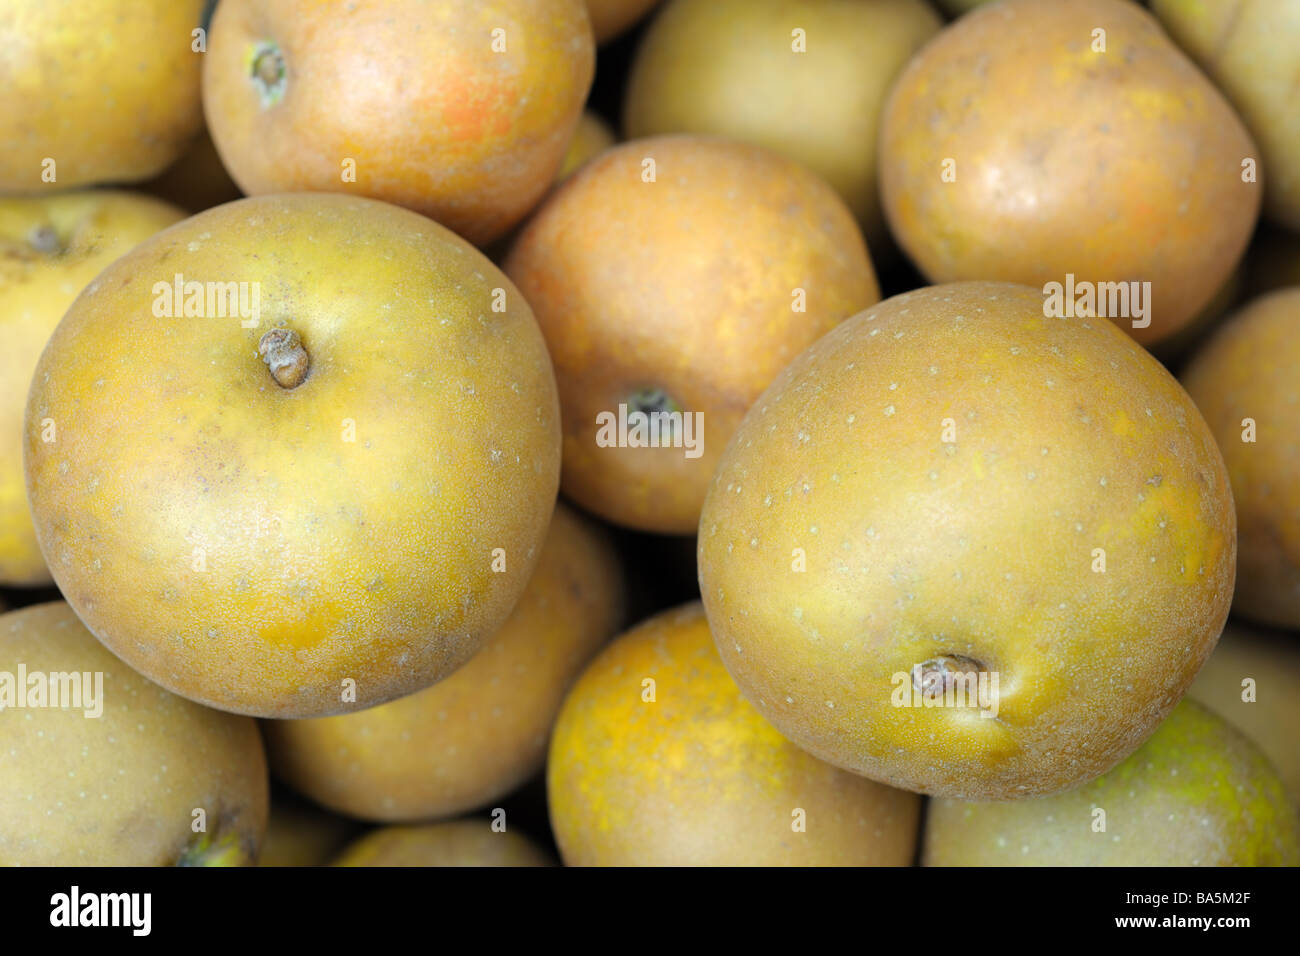 Closeup of dull gold Egremont Russet dessert apples Stock Photo